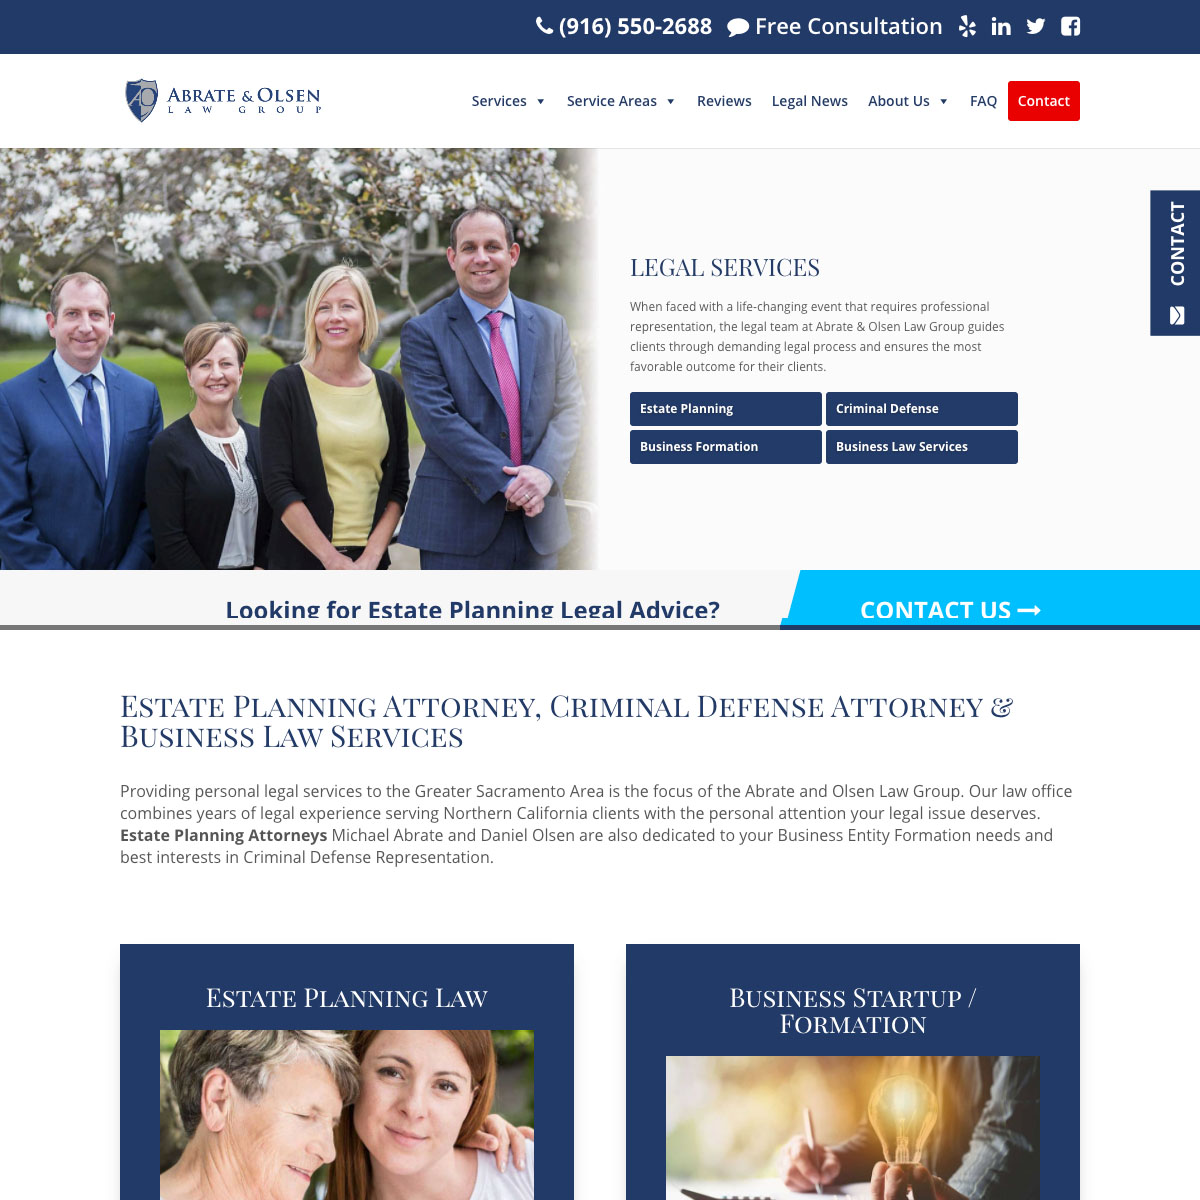 Abrate & Olsen Law Group Website Design Screenshot 1